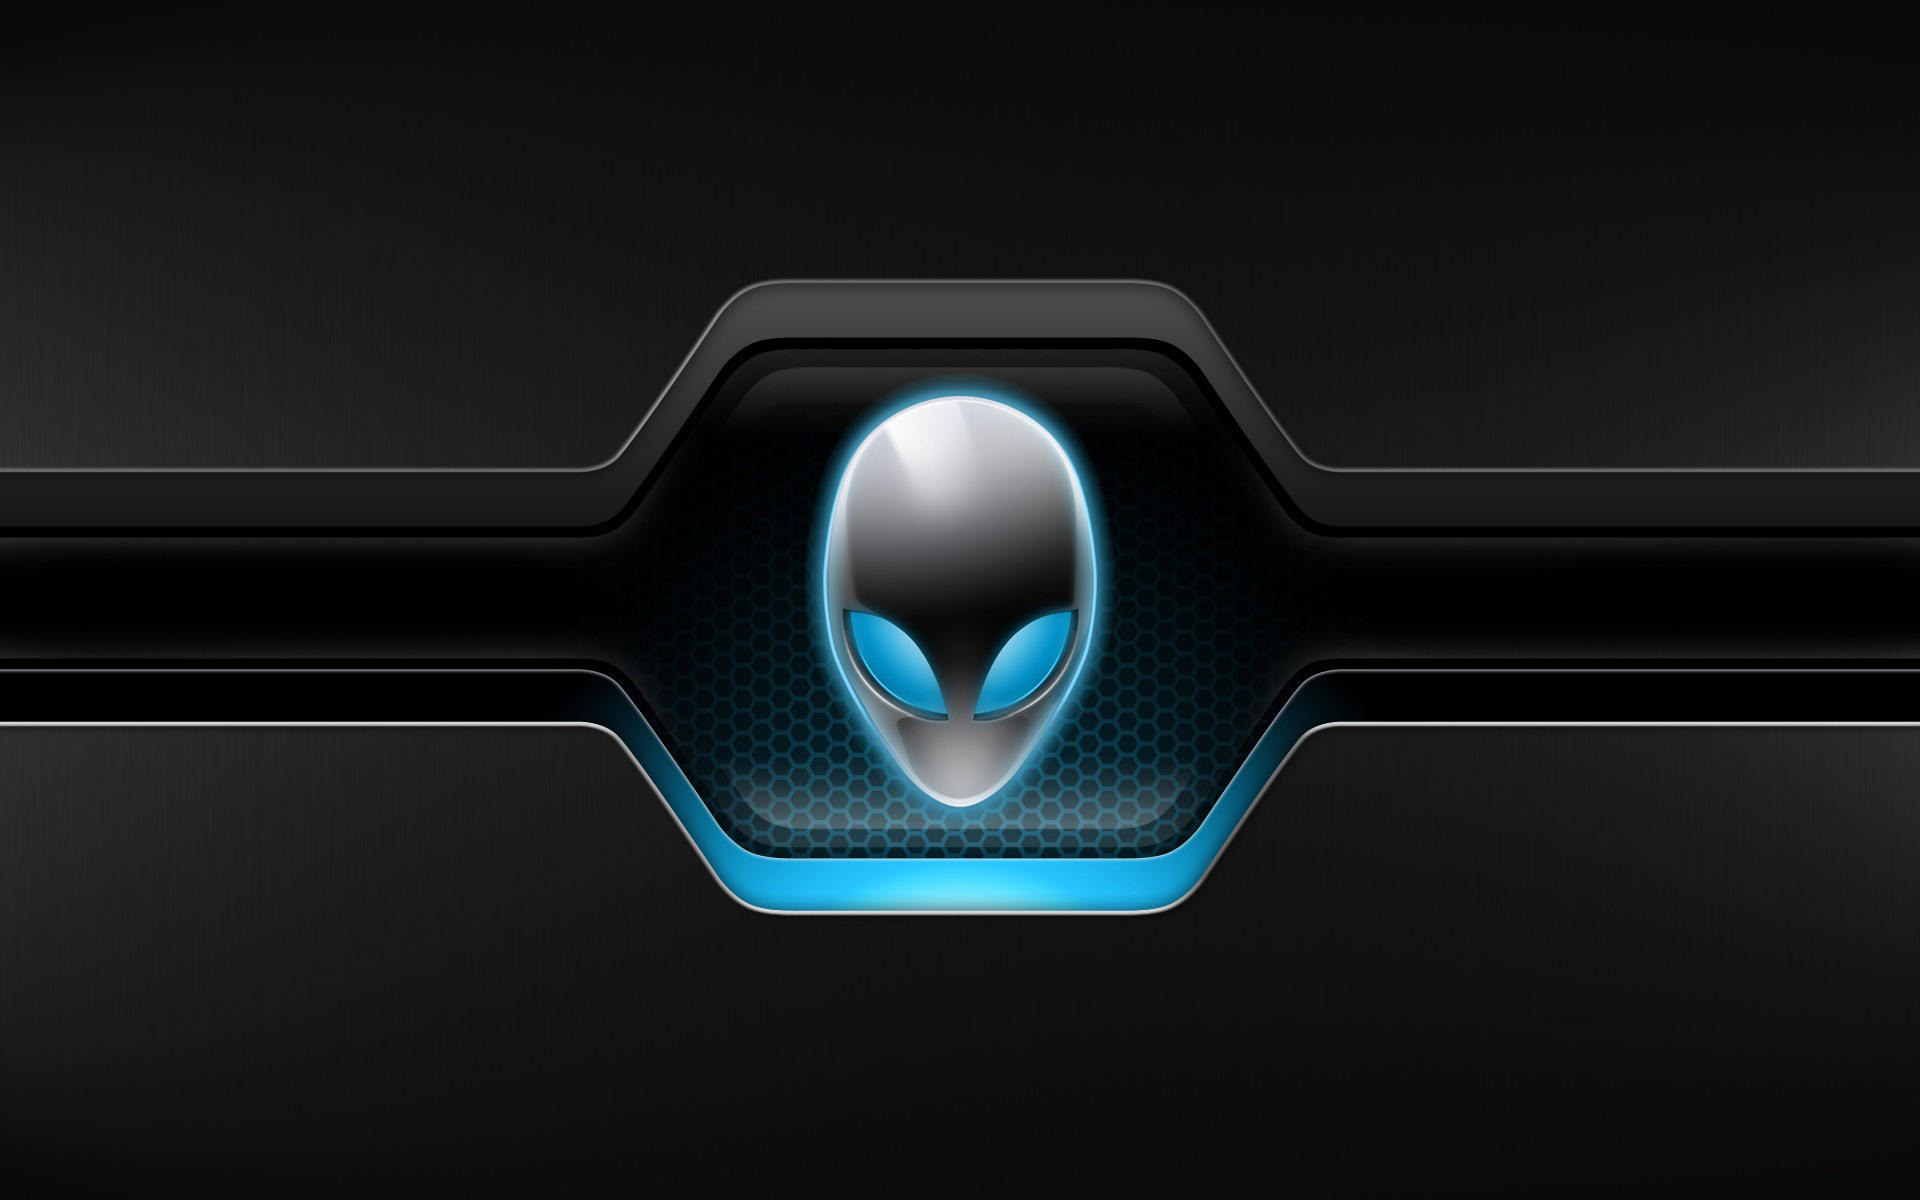 Free download wallpaper Technology, Alienware on your PC desktop